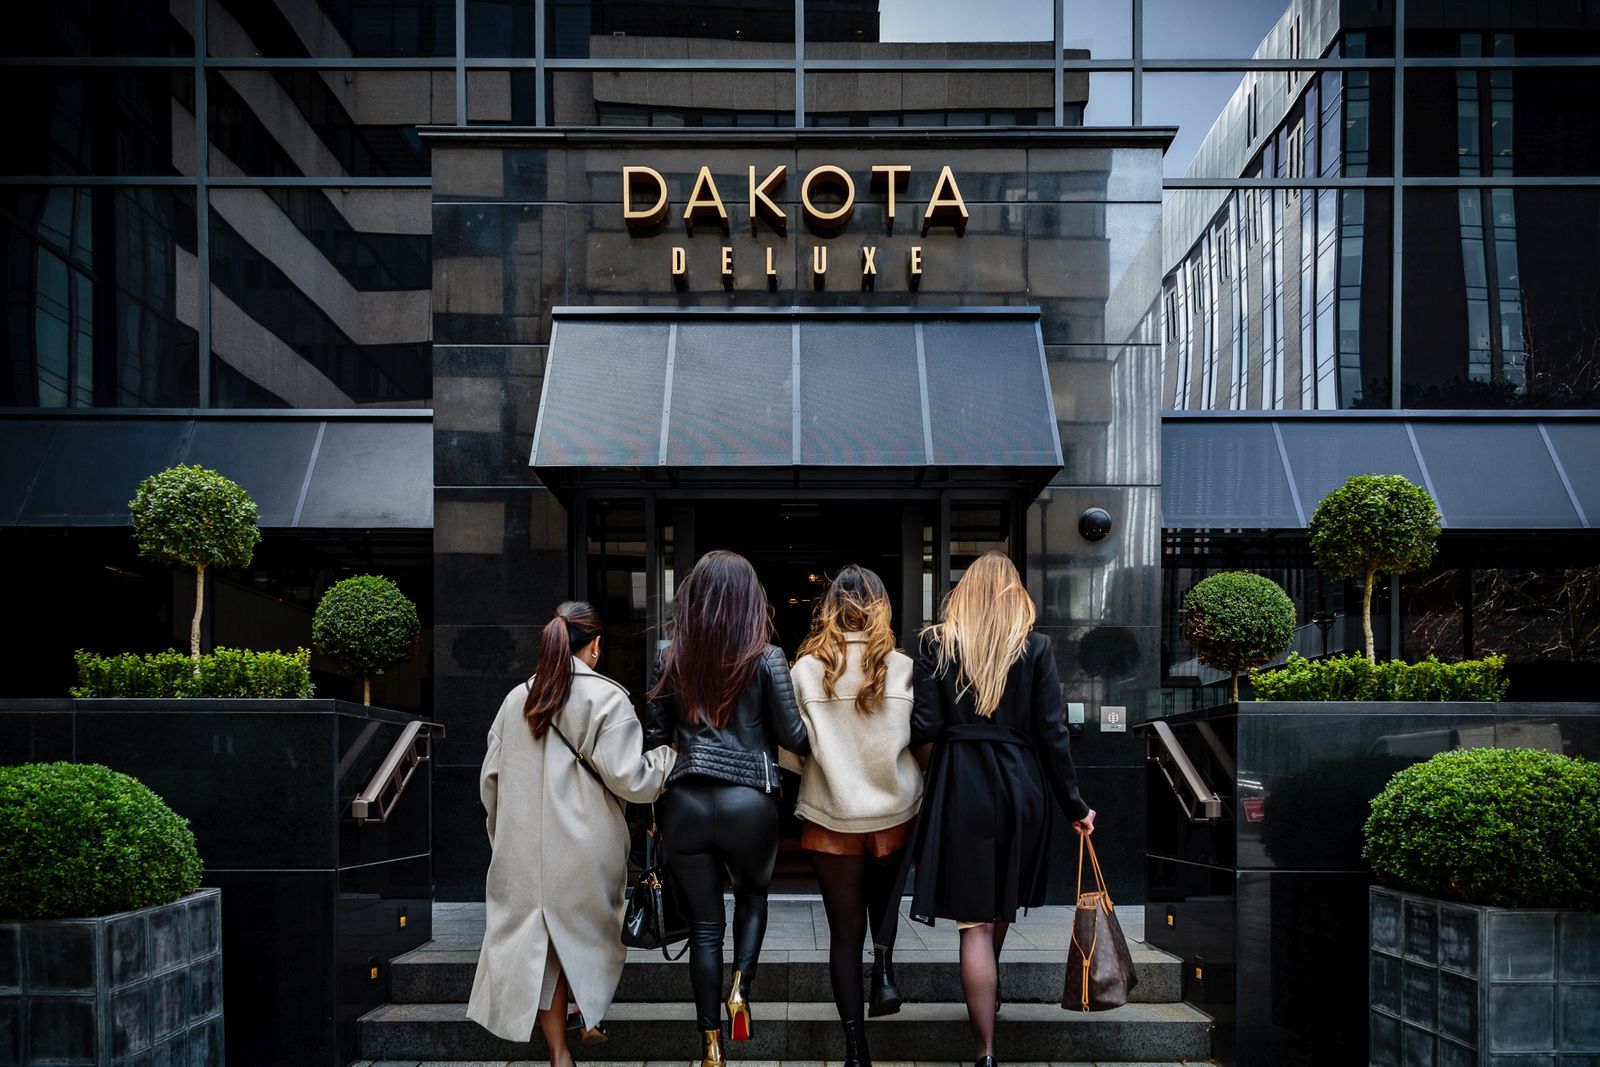 Better days at Dakota: as Leeds hotel prepares to reopen